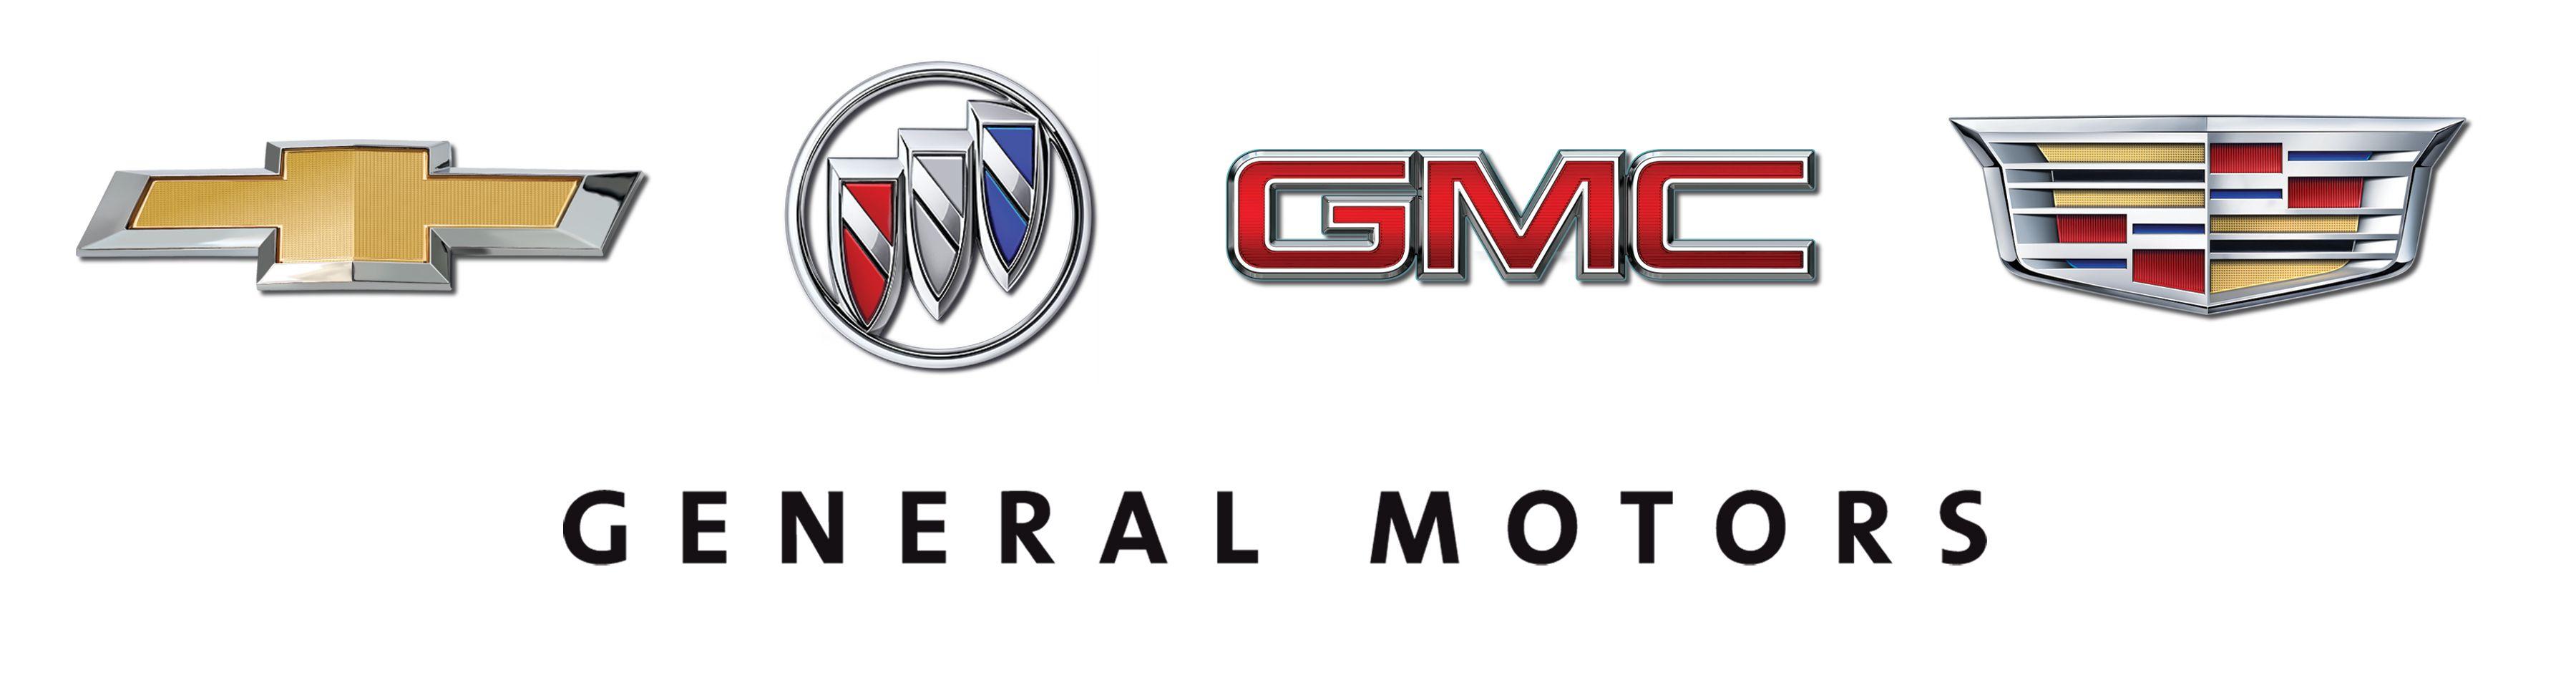 General Motors Logo - GM Corporate Newsroom - United States - Images